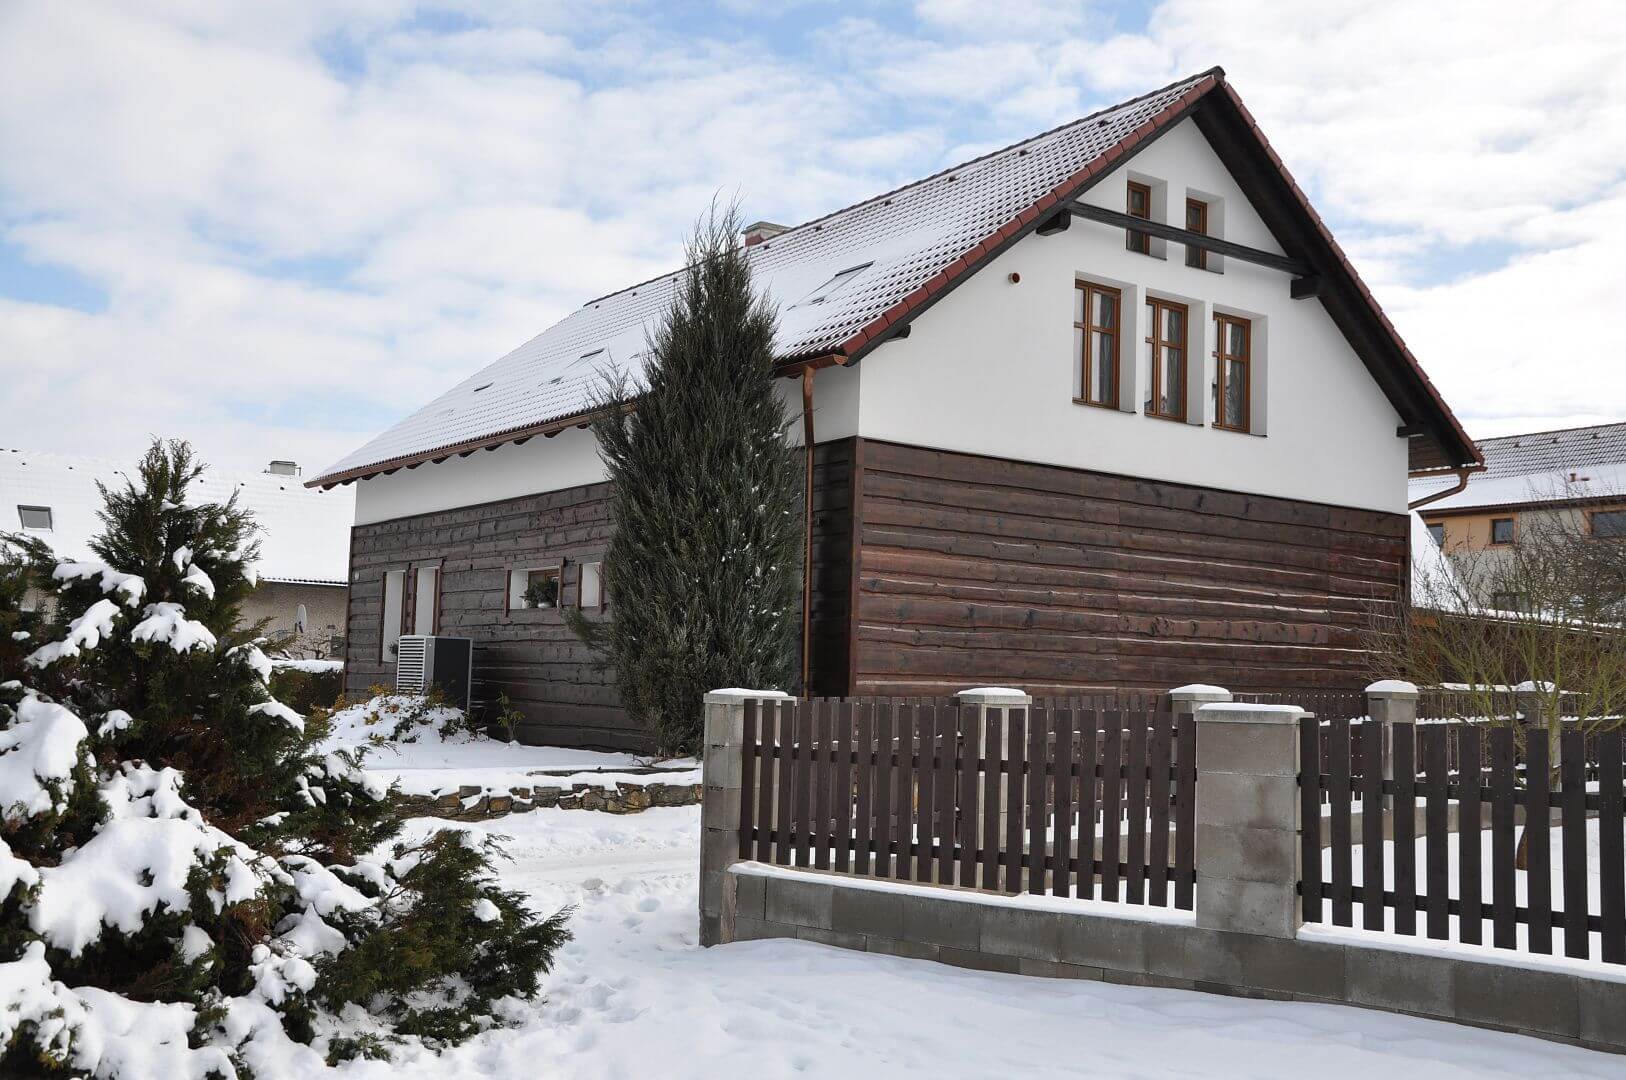 Novostavba RD Říkov / Newly built family house in village Říkov